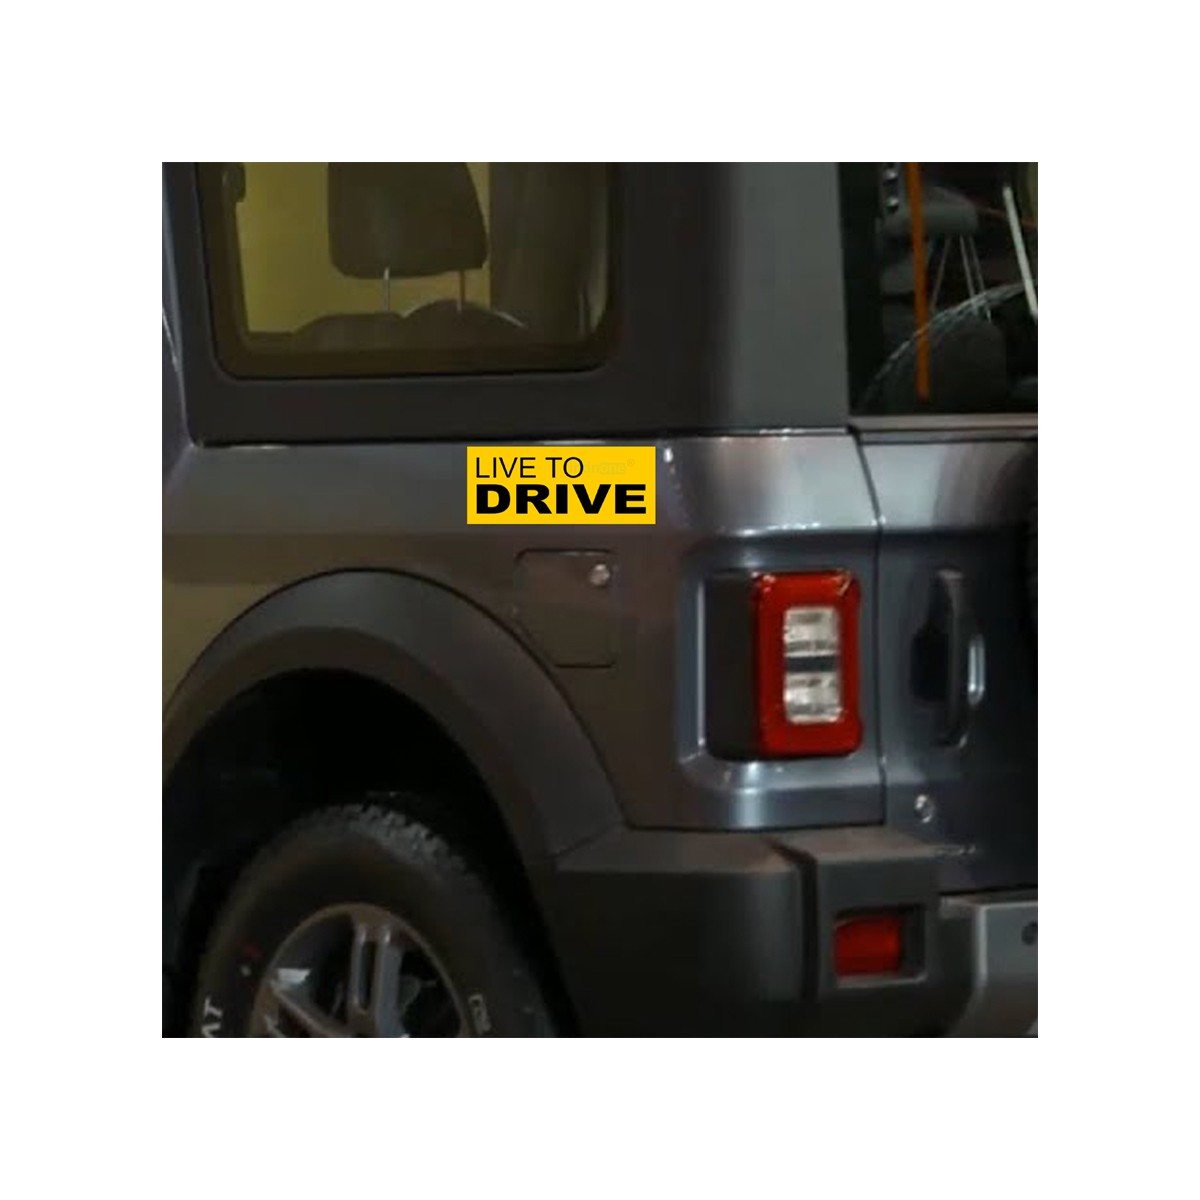 indnone® New Live to Drive Logo Sticker for Car Sticker Stylish Vinyl Decal Sticker | Standard Size Windows Side Hood Bumper